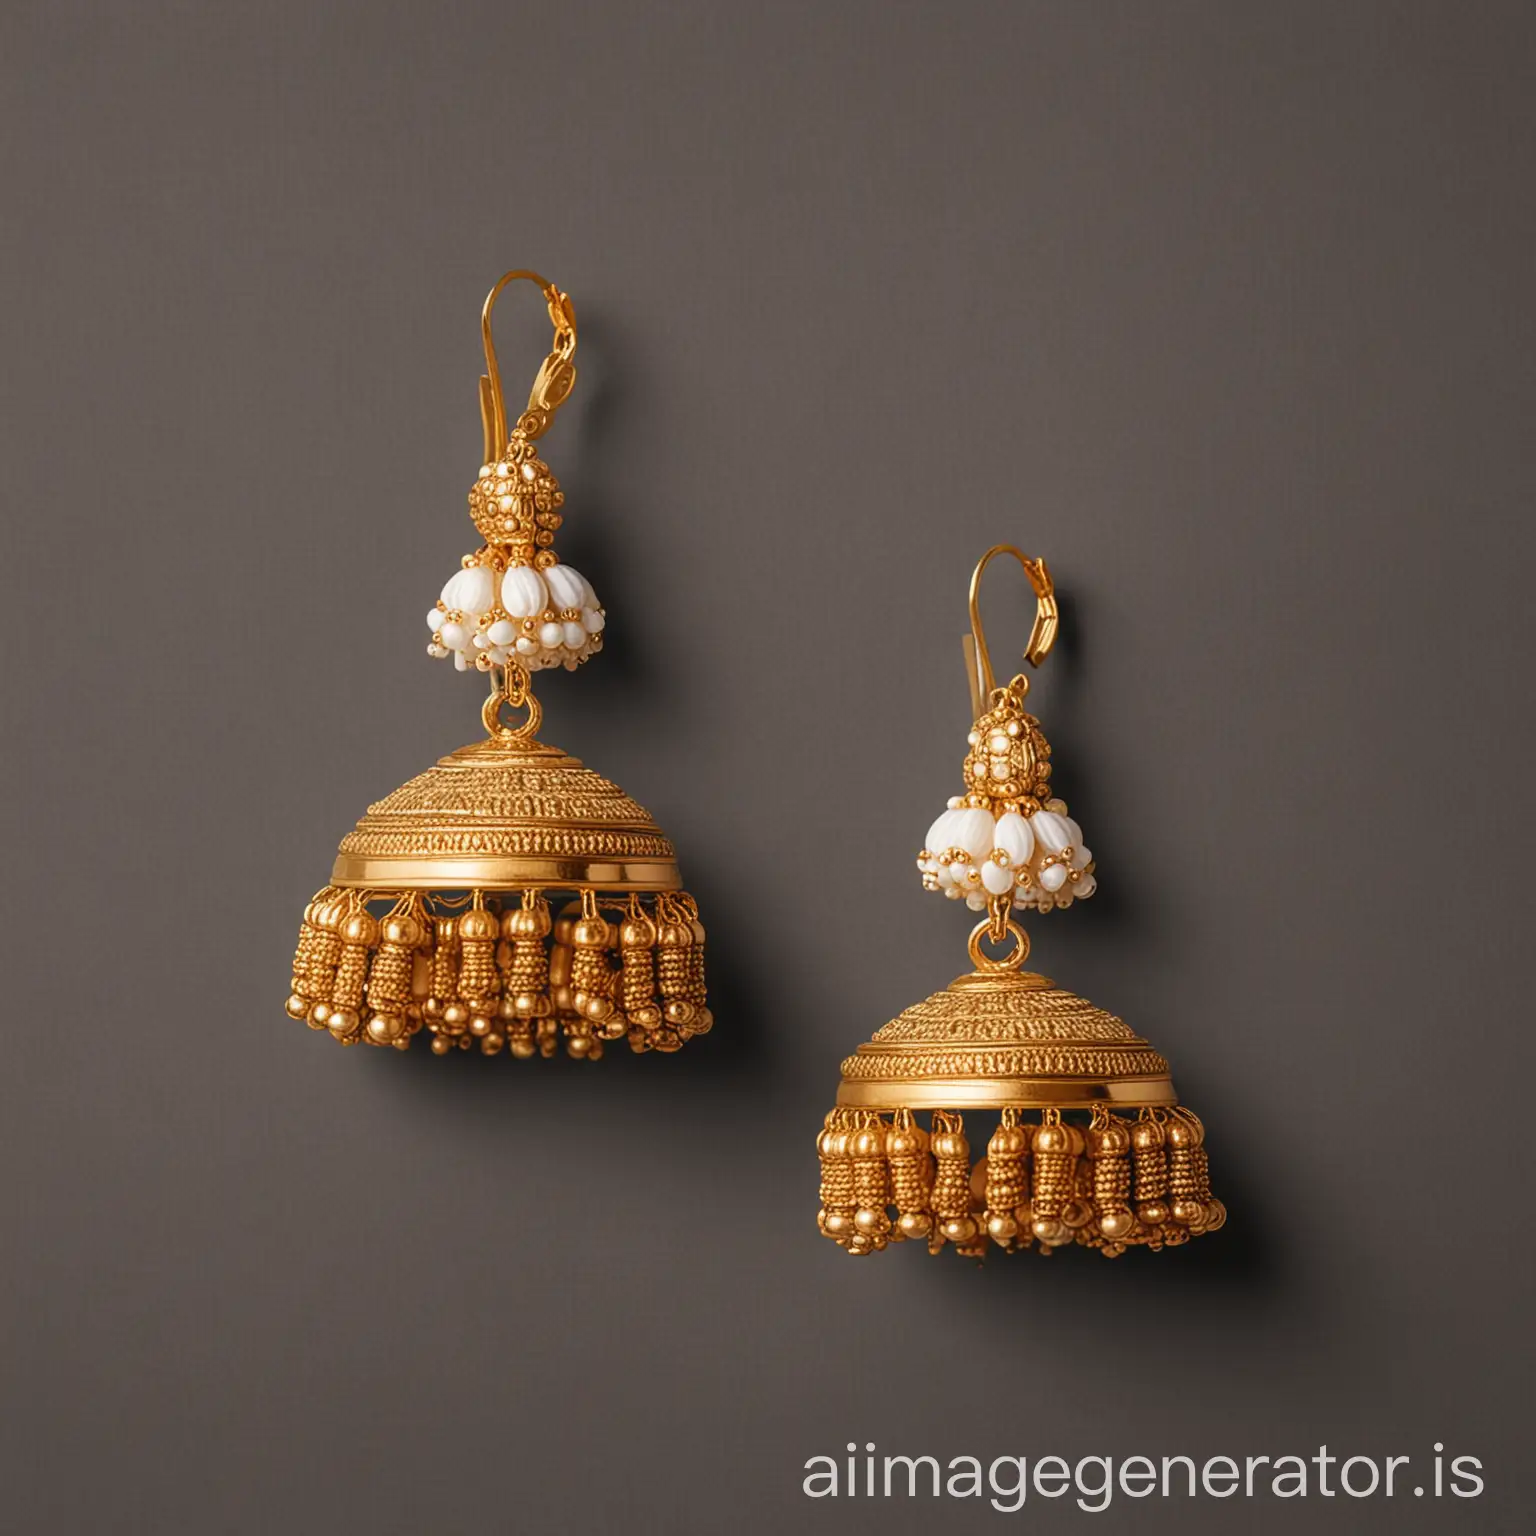 Realistic-Indian-Modern-Jimmiki-Earrings-on-Plain-Background